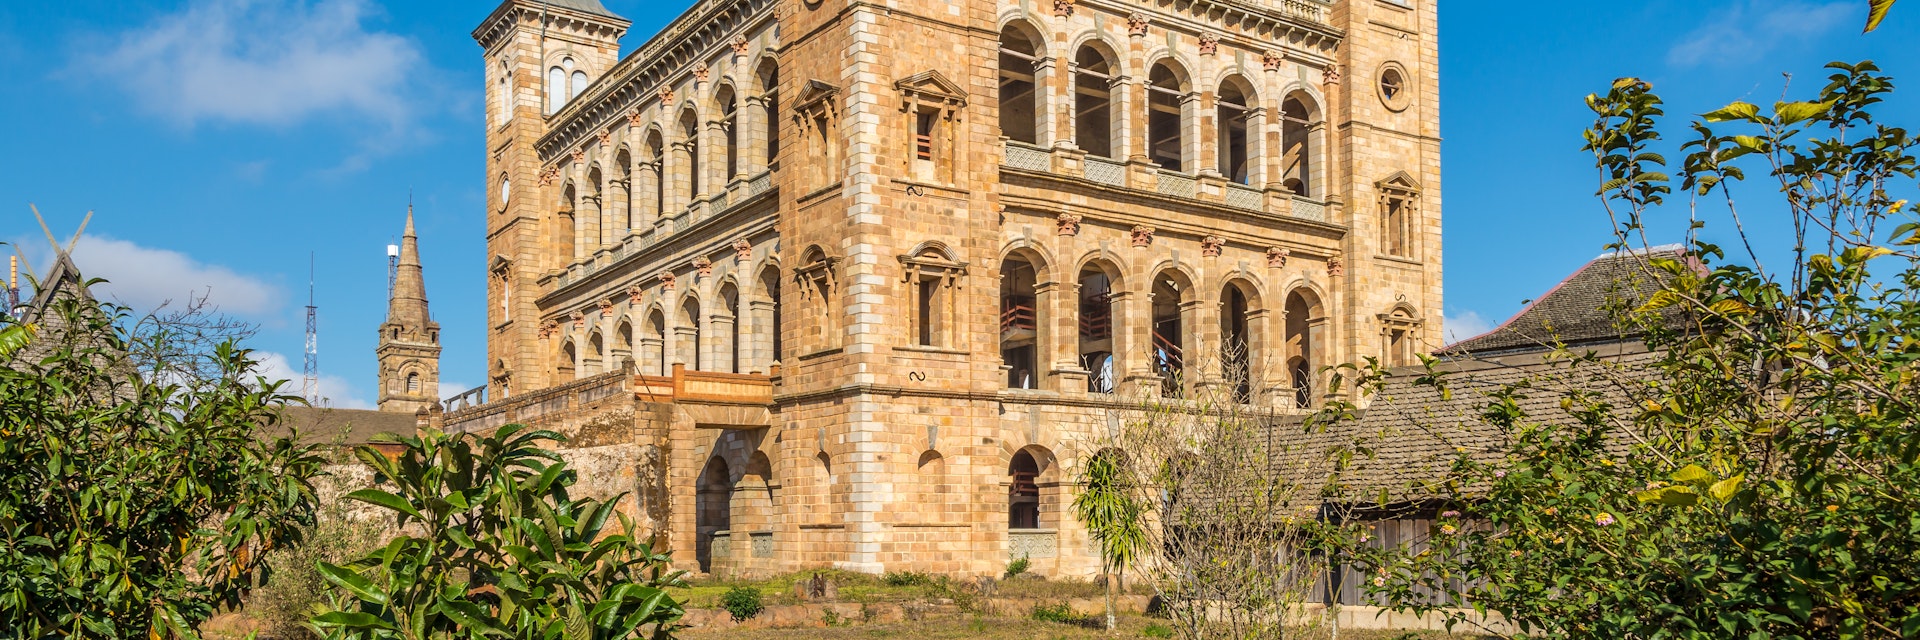 Queen's Palace complex, Rova of Antananarivo
